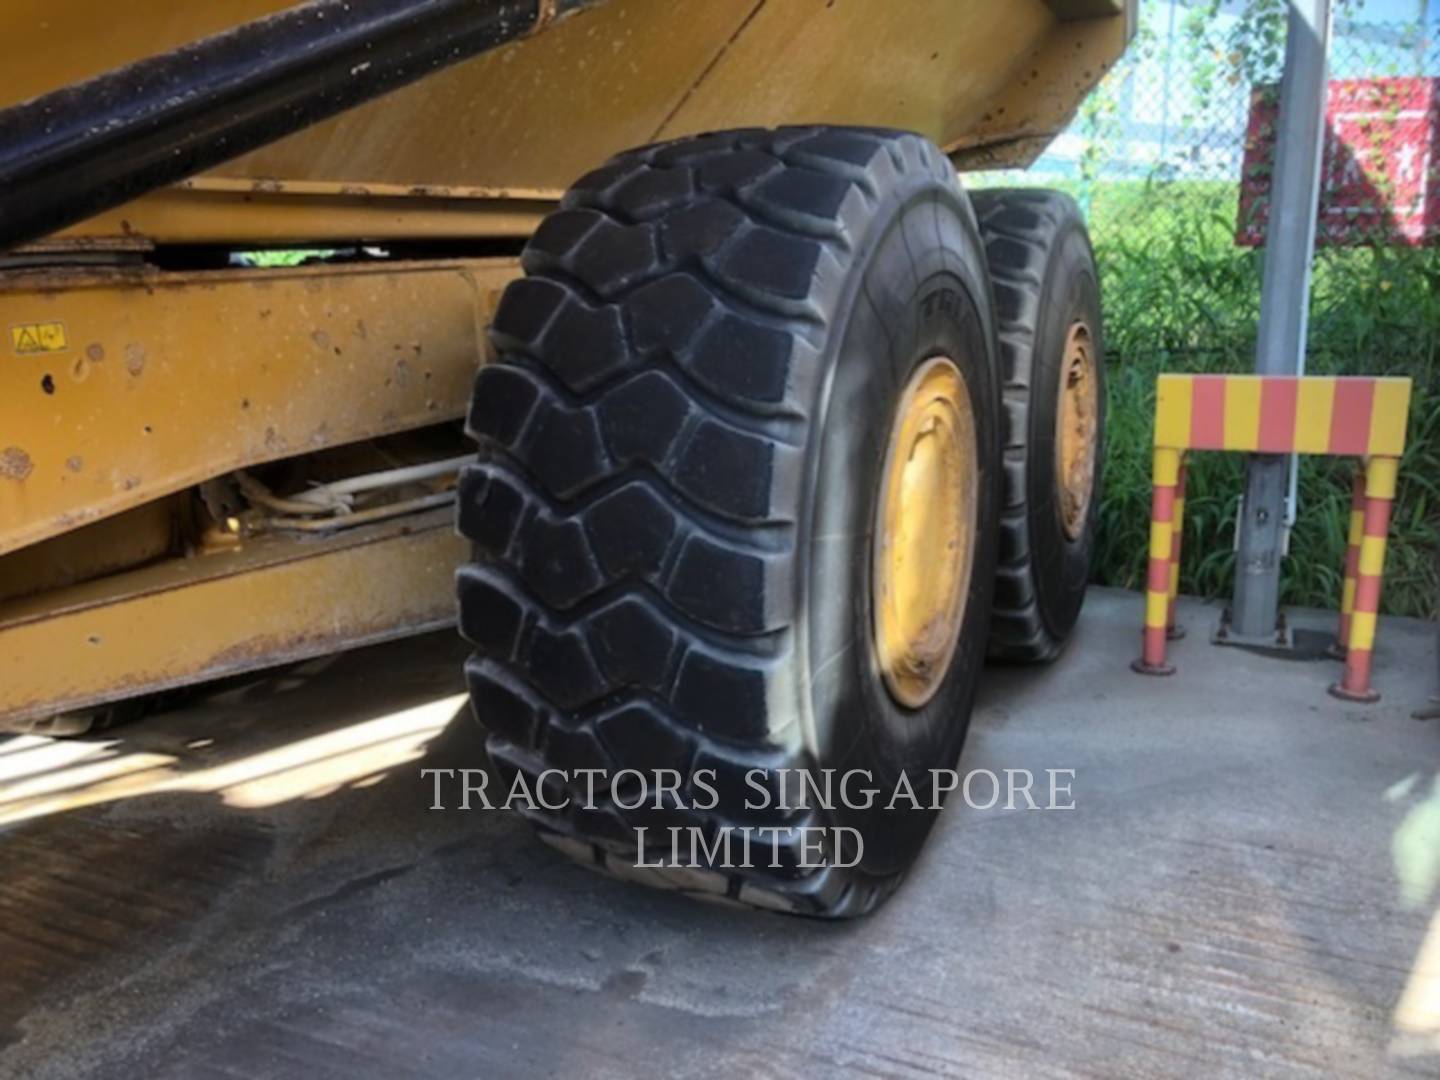 wtk?JHNyYz1jYjZjNjg4NmY5YmEwMmU2ZDliMzE5NGE0MDRjMTczYyYkdHh0PVRSQUNUT1JTJTIwU0lOR0FQT1JFJTIwTElNSVRFRCY0MzYwNQ== 745C | Tractors Singapore